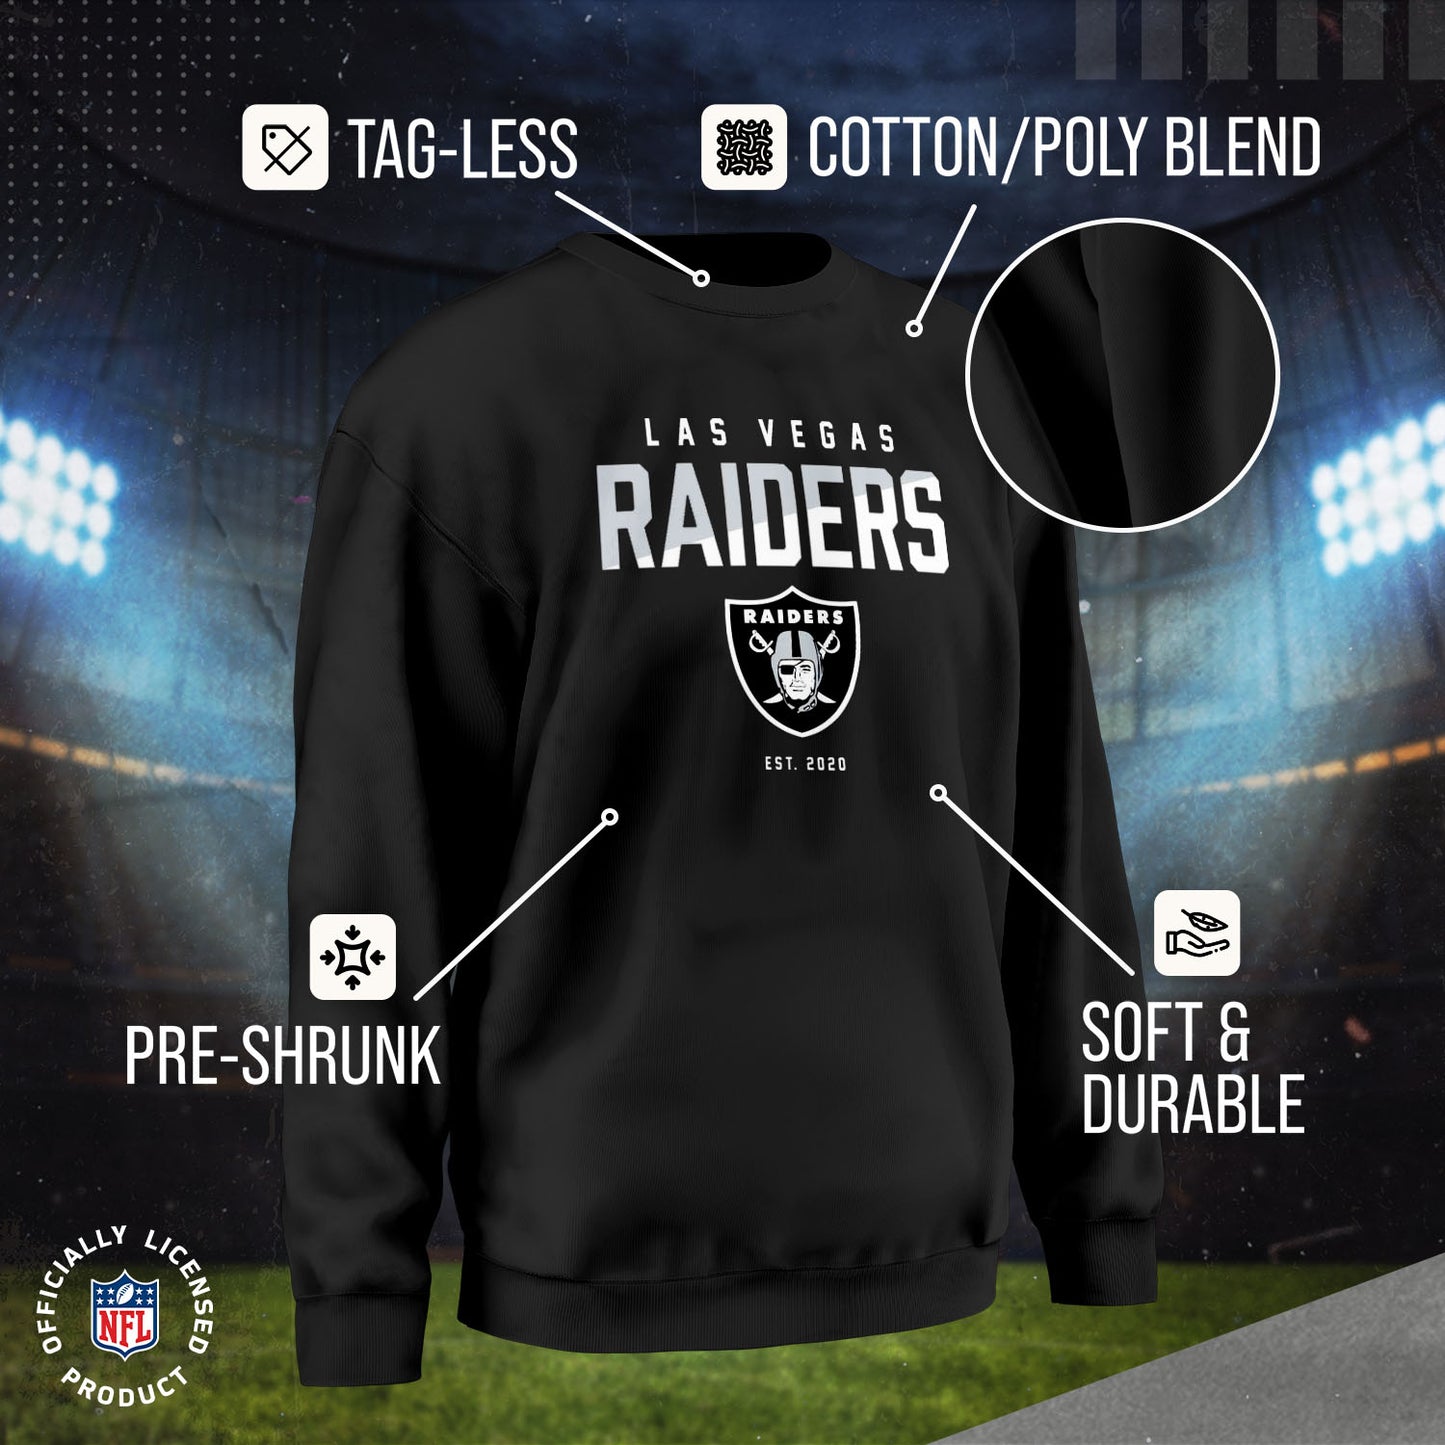 Las Vegas Raiders Adult NFL Diagonal Fade Color Block Crewneck Sweatshirt - Black